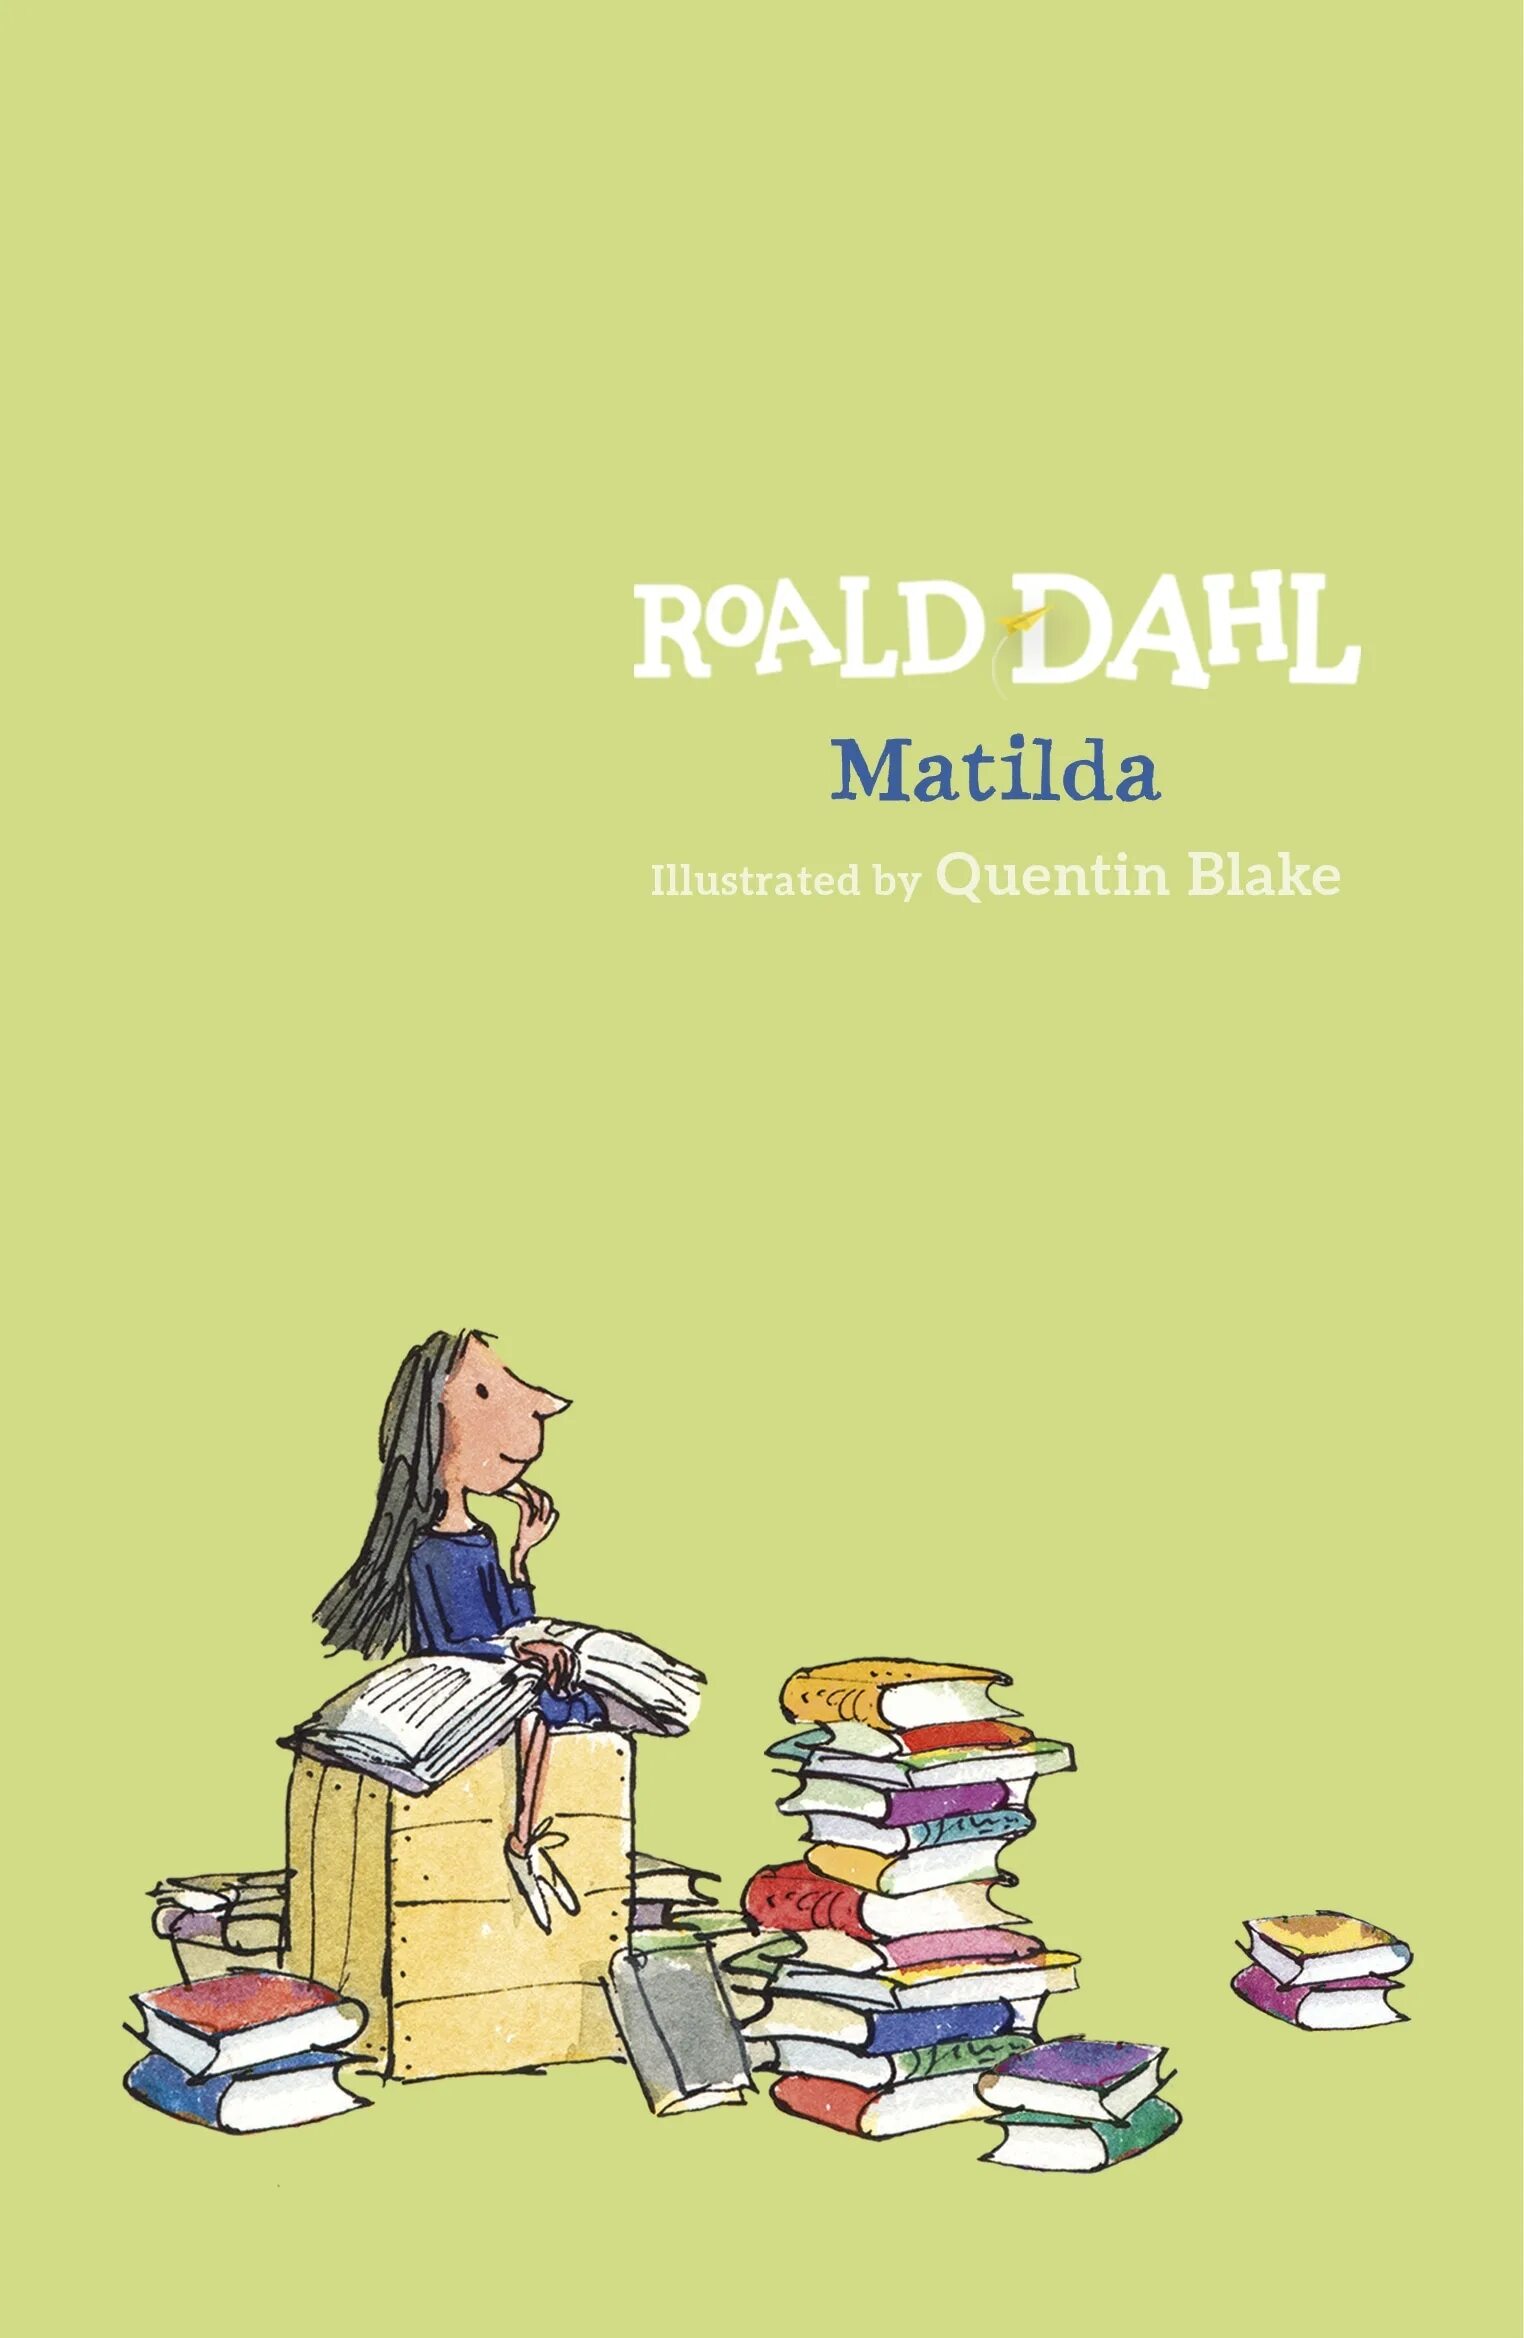 Dahl Roald "Matilda".